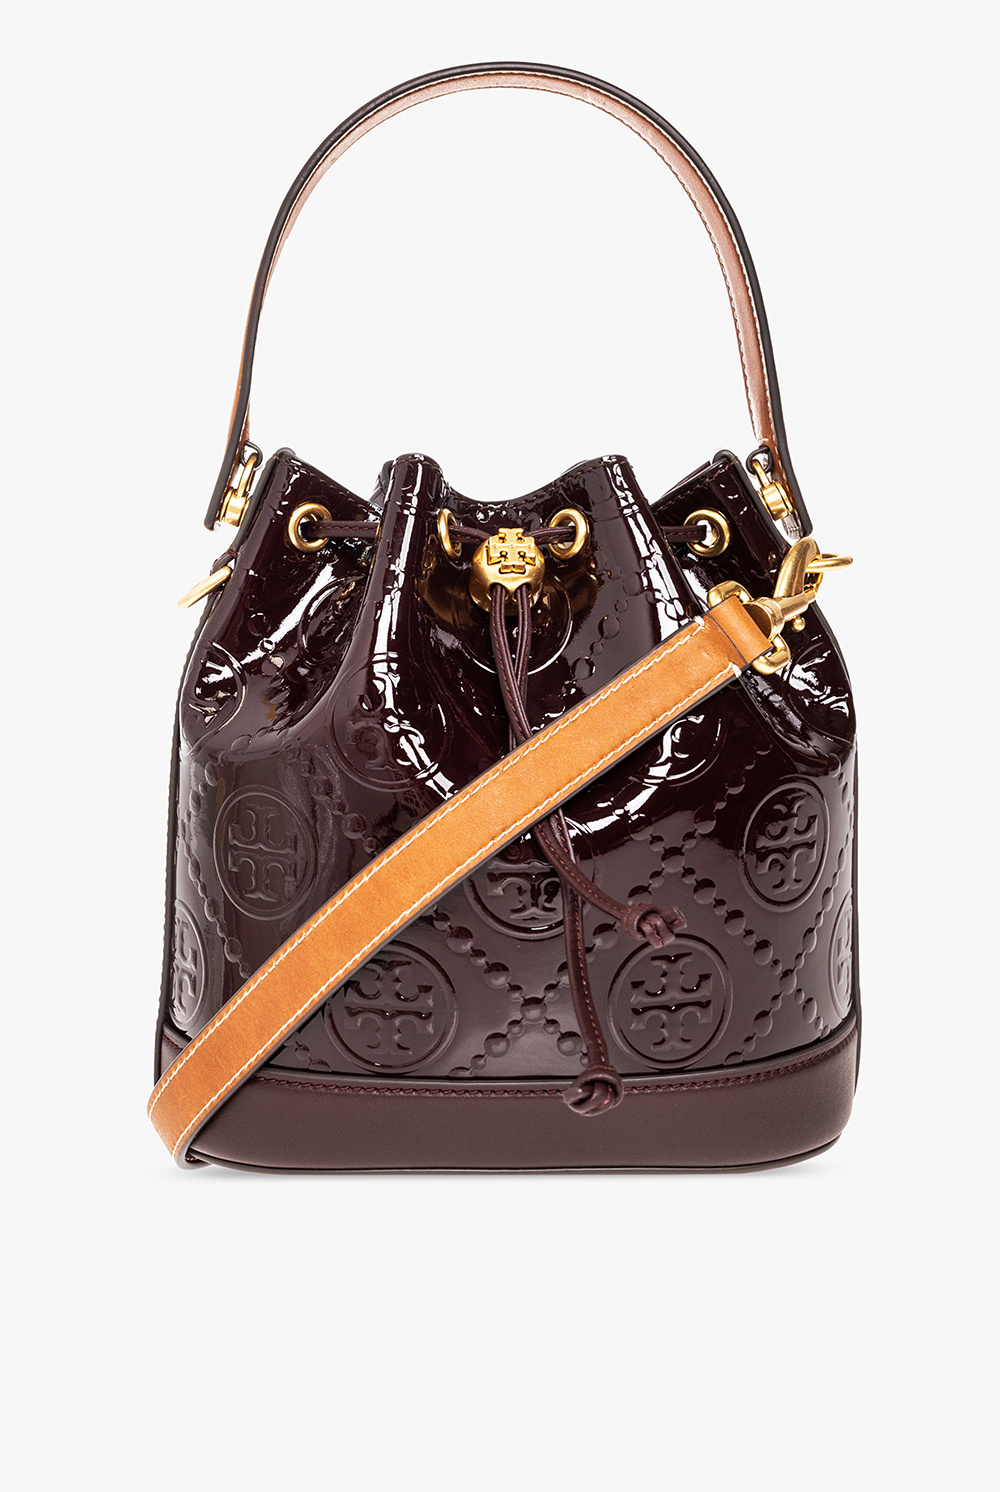 Louis Vuitton Patent Leather Handbag In Burgundy